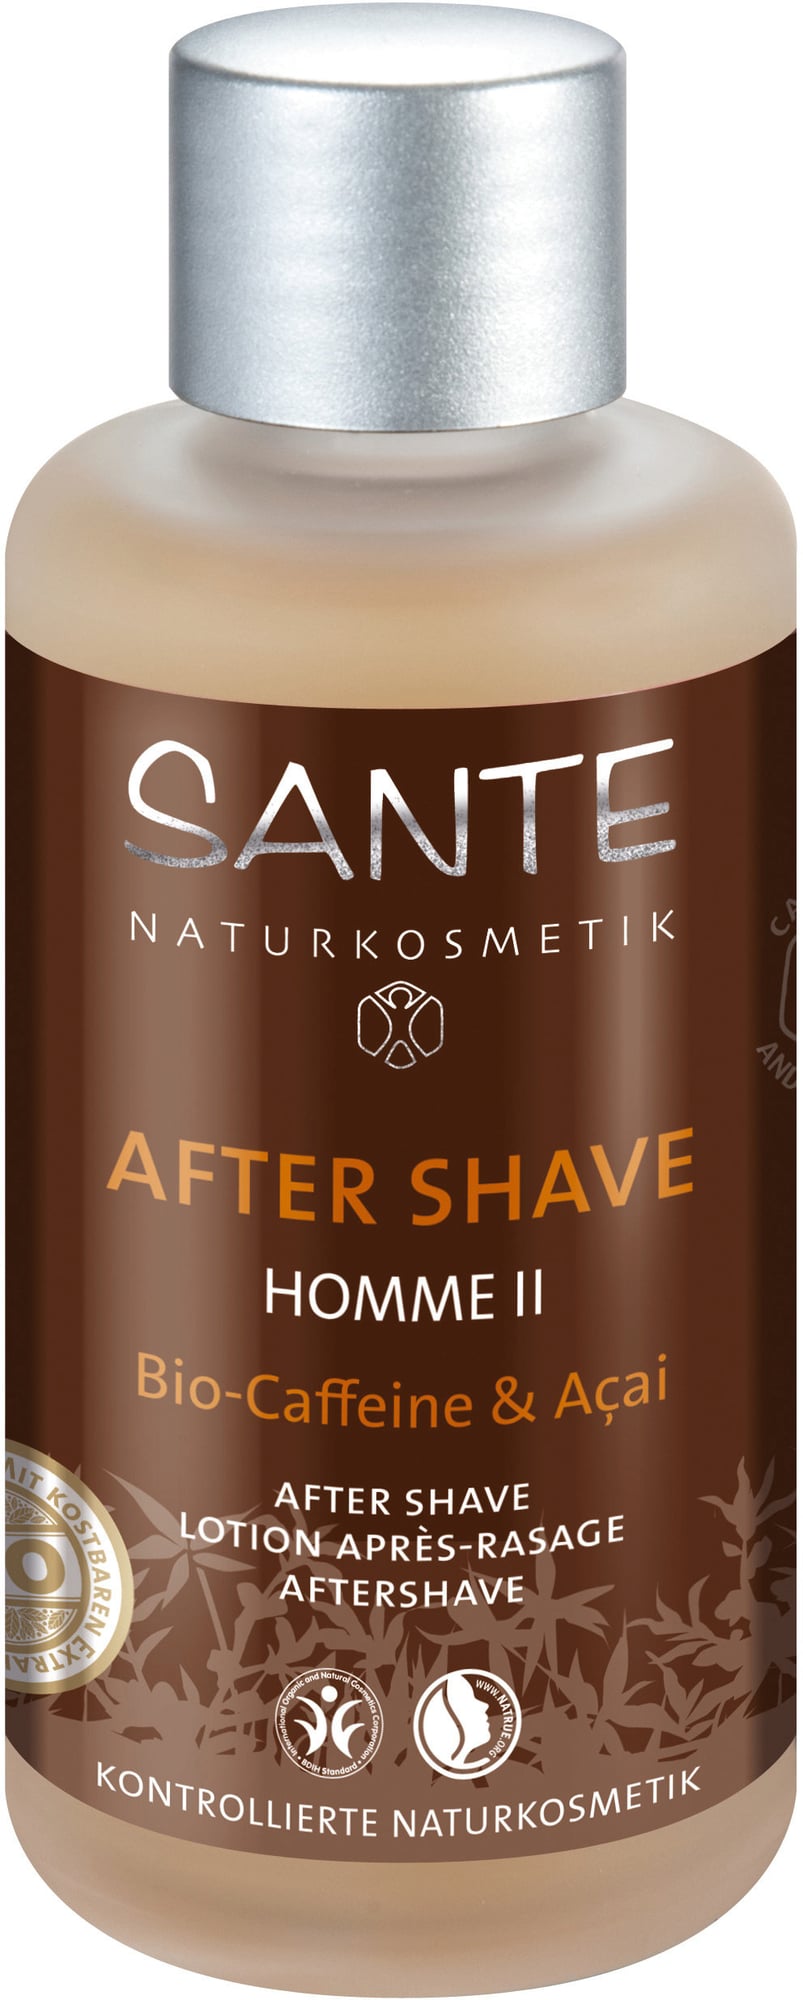 SANTE Homme II After Shave Bio-Caffeine & Acai